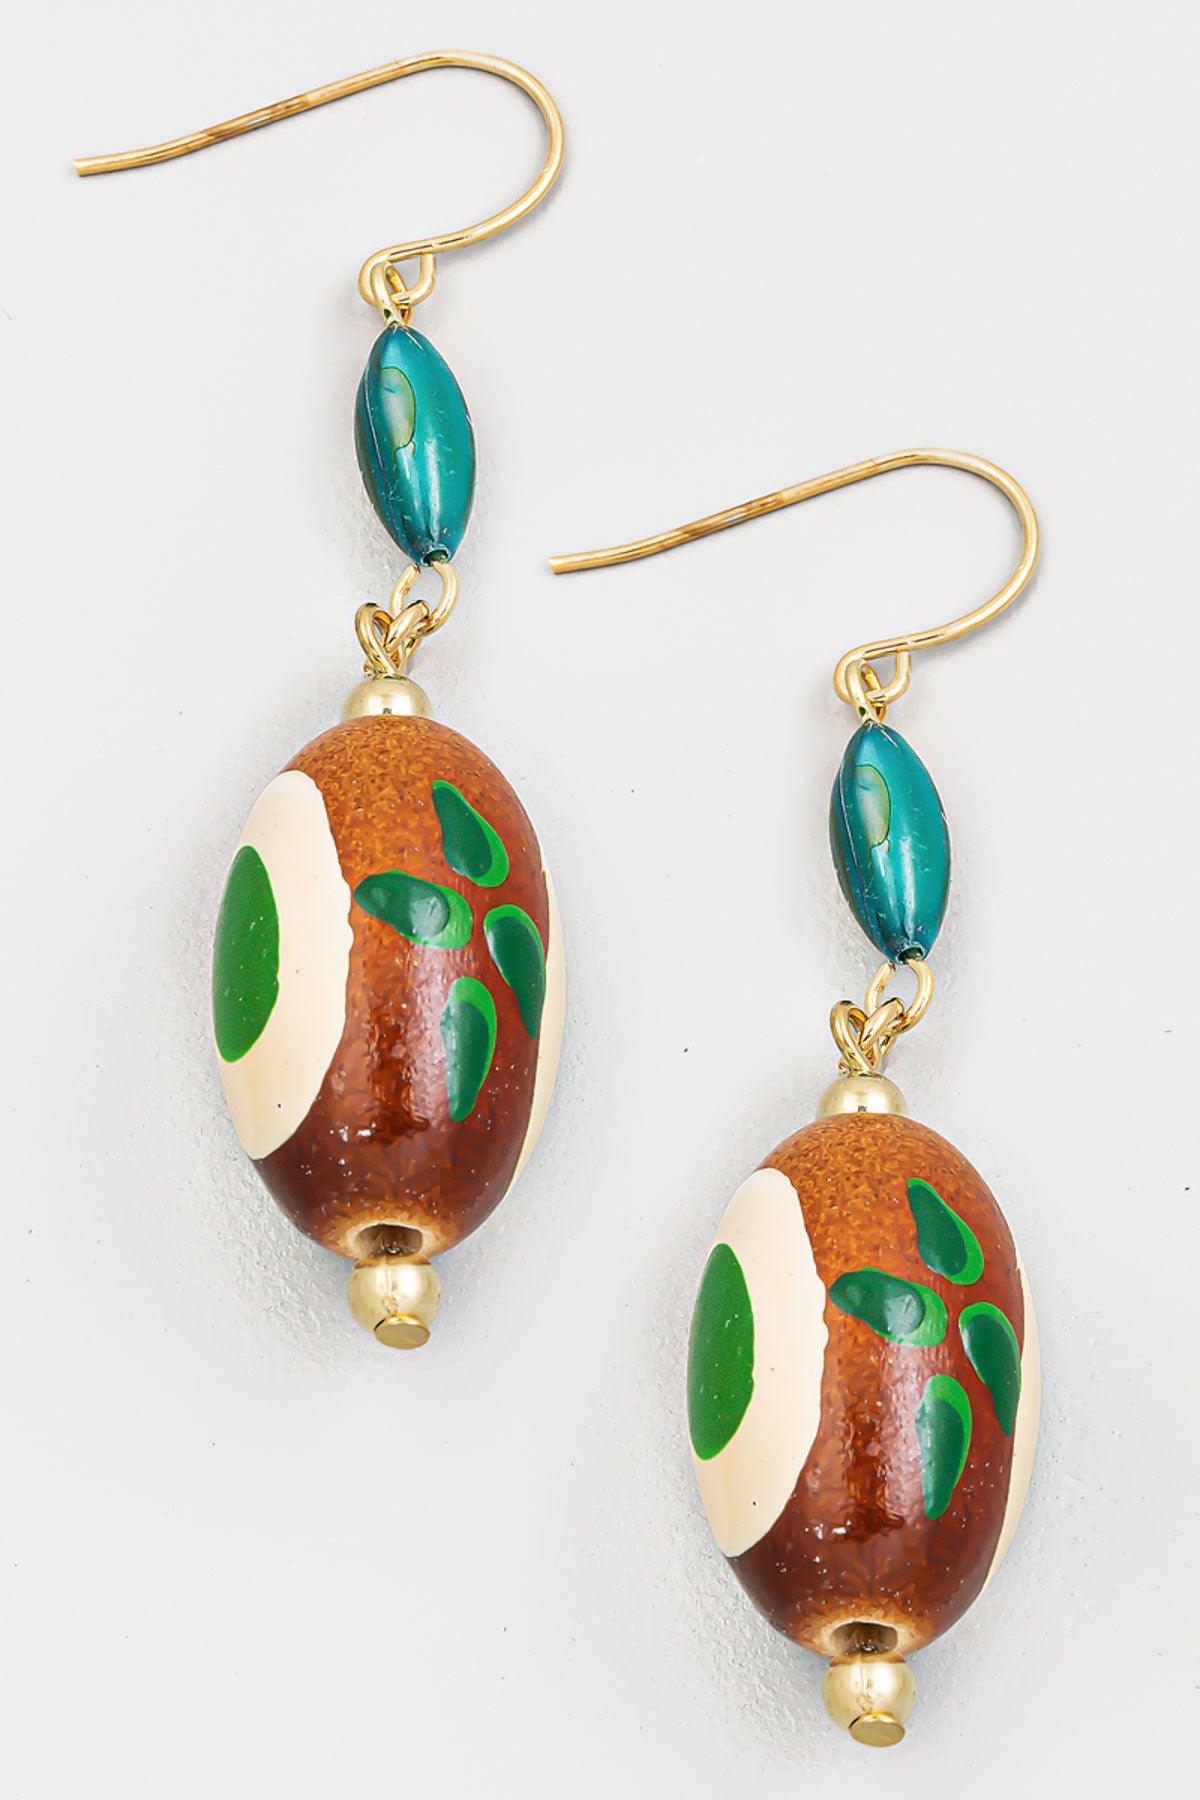 Boho Colorful Oval Wood Bead Drop Earrings - Tasha Apparel Wholesale